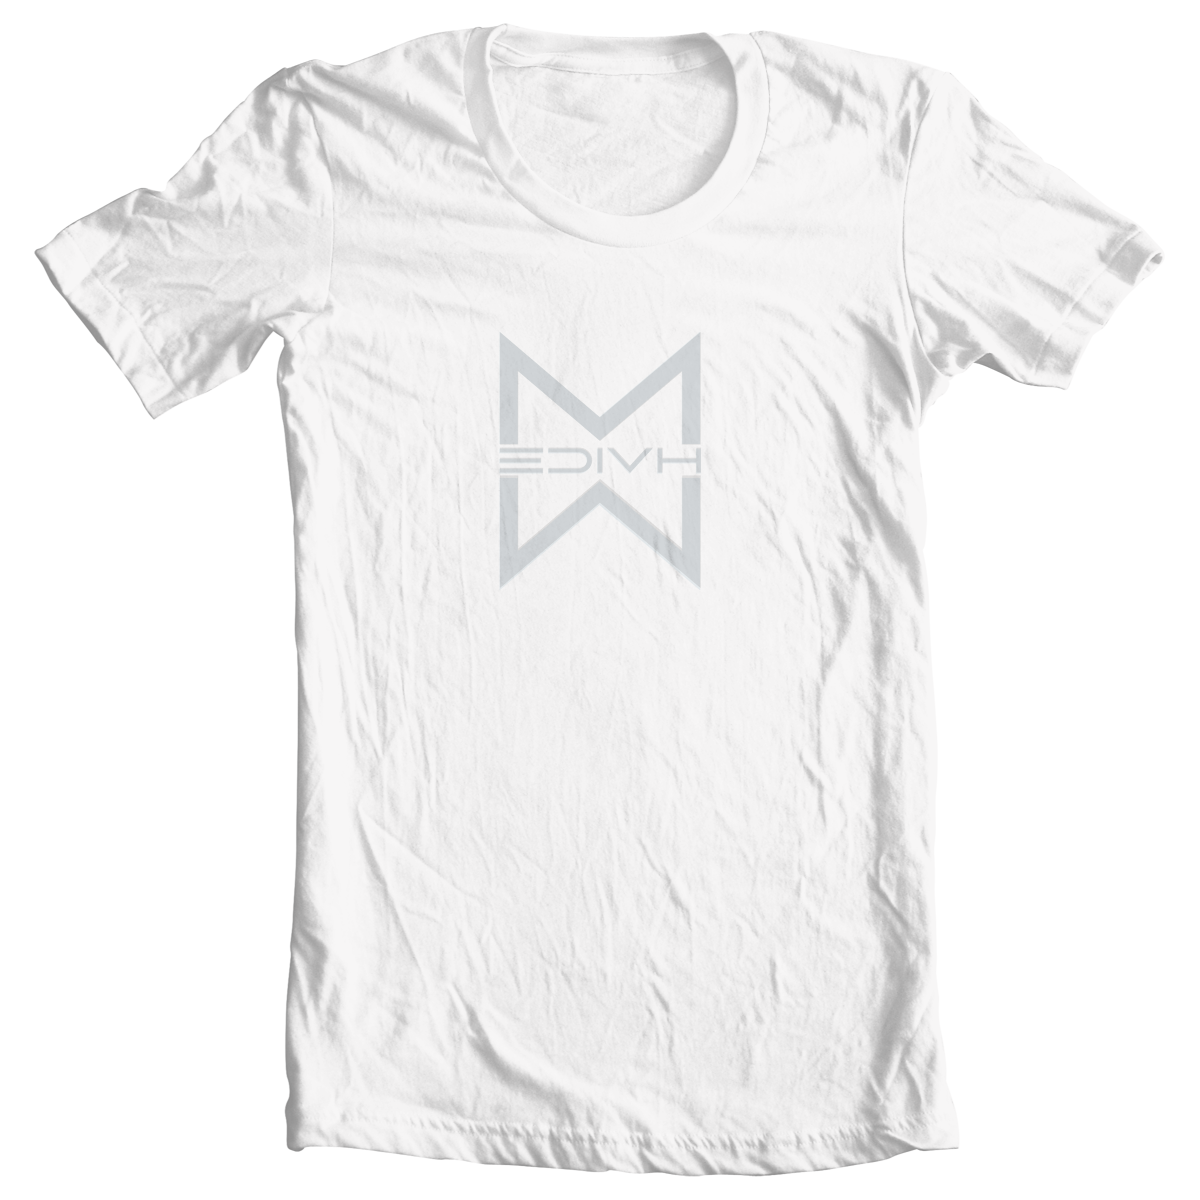 T-shirt white Medivh logo